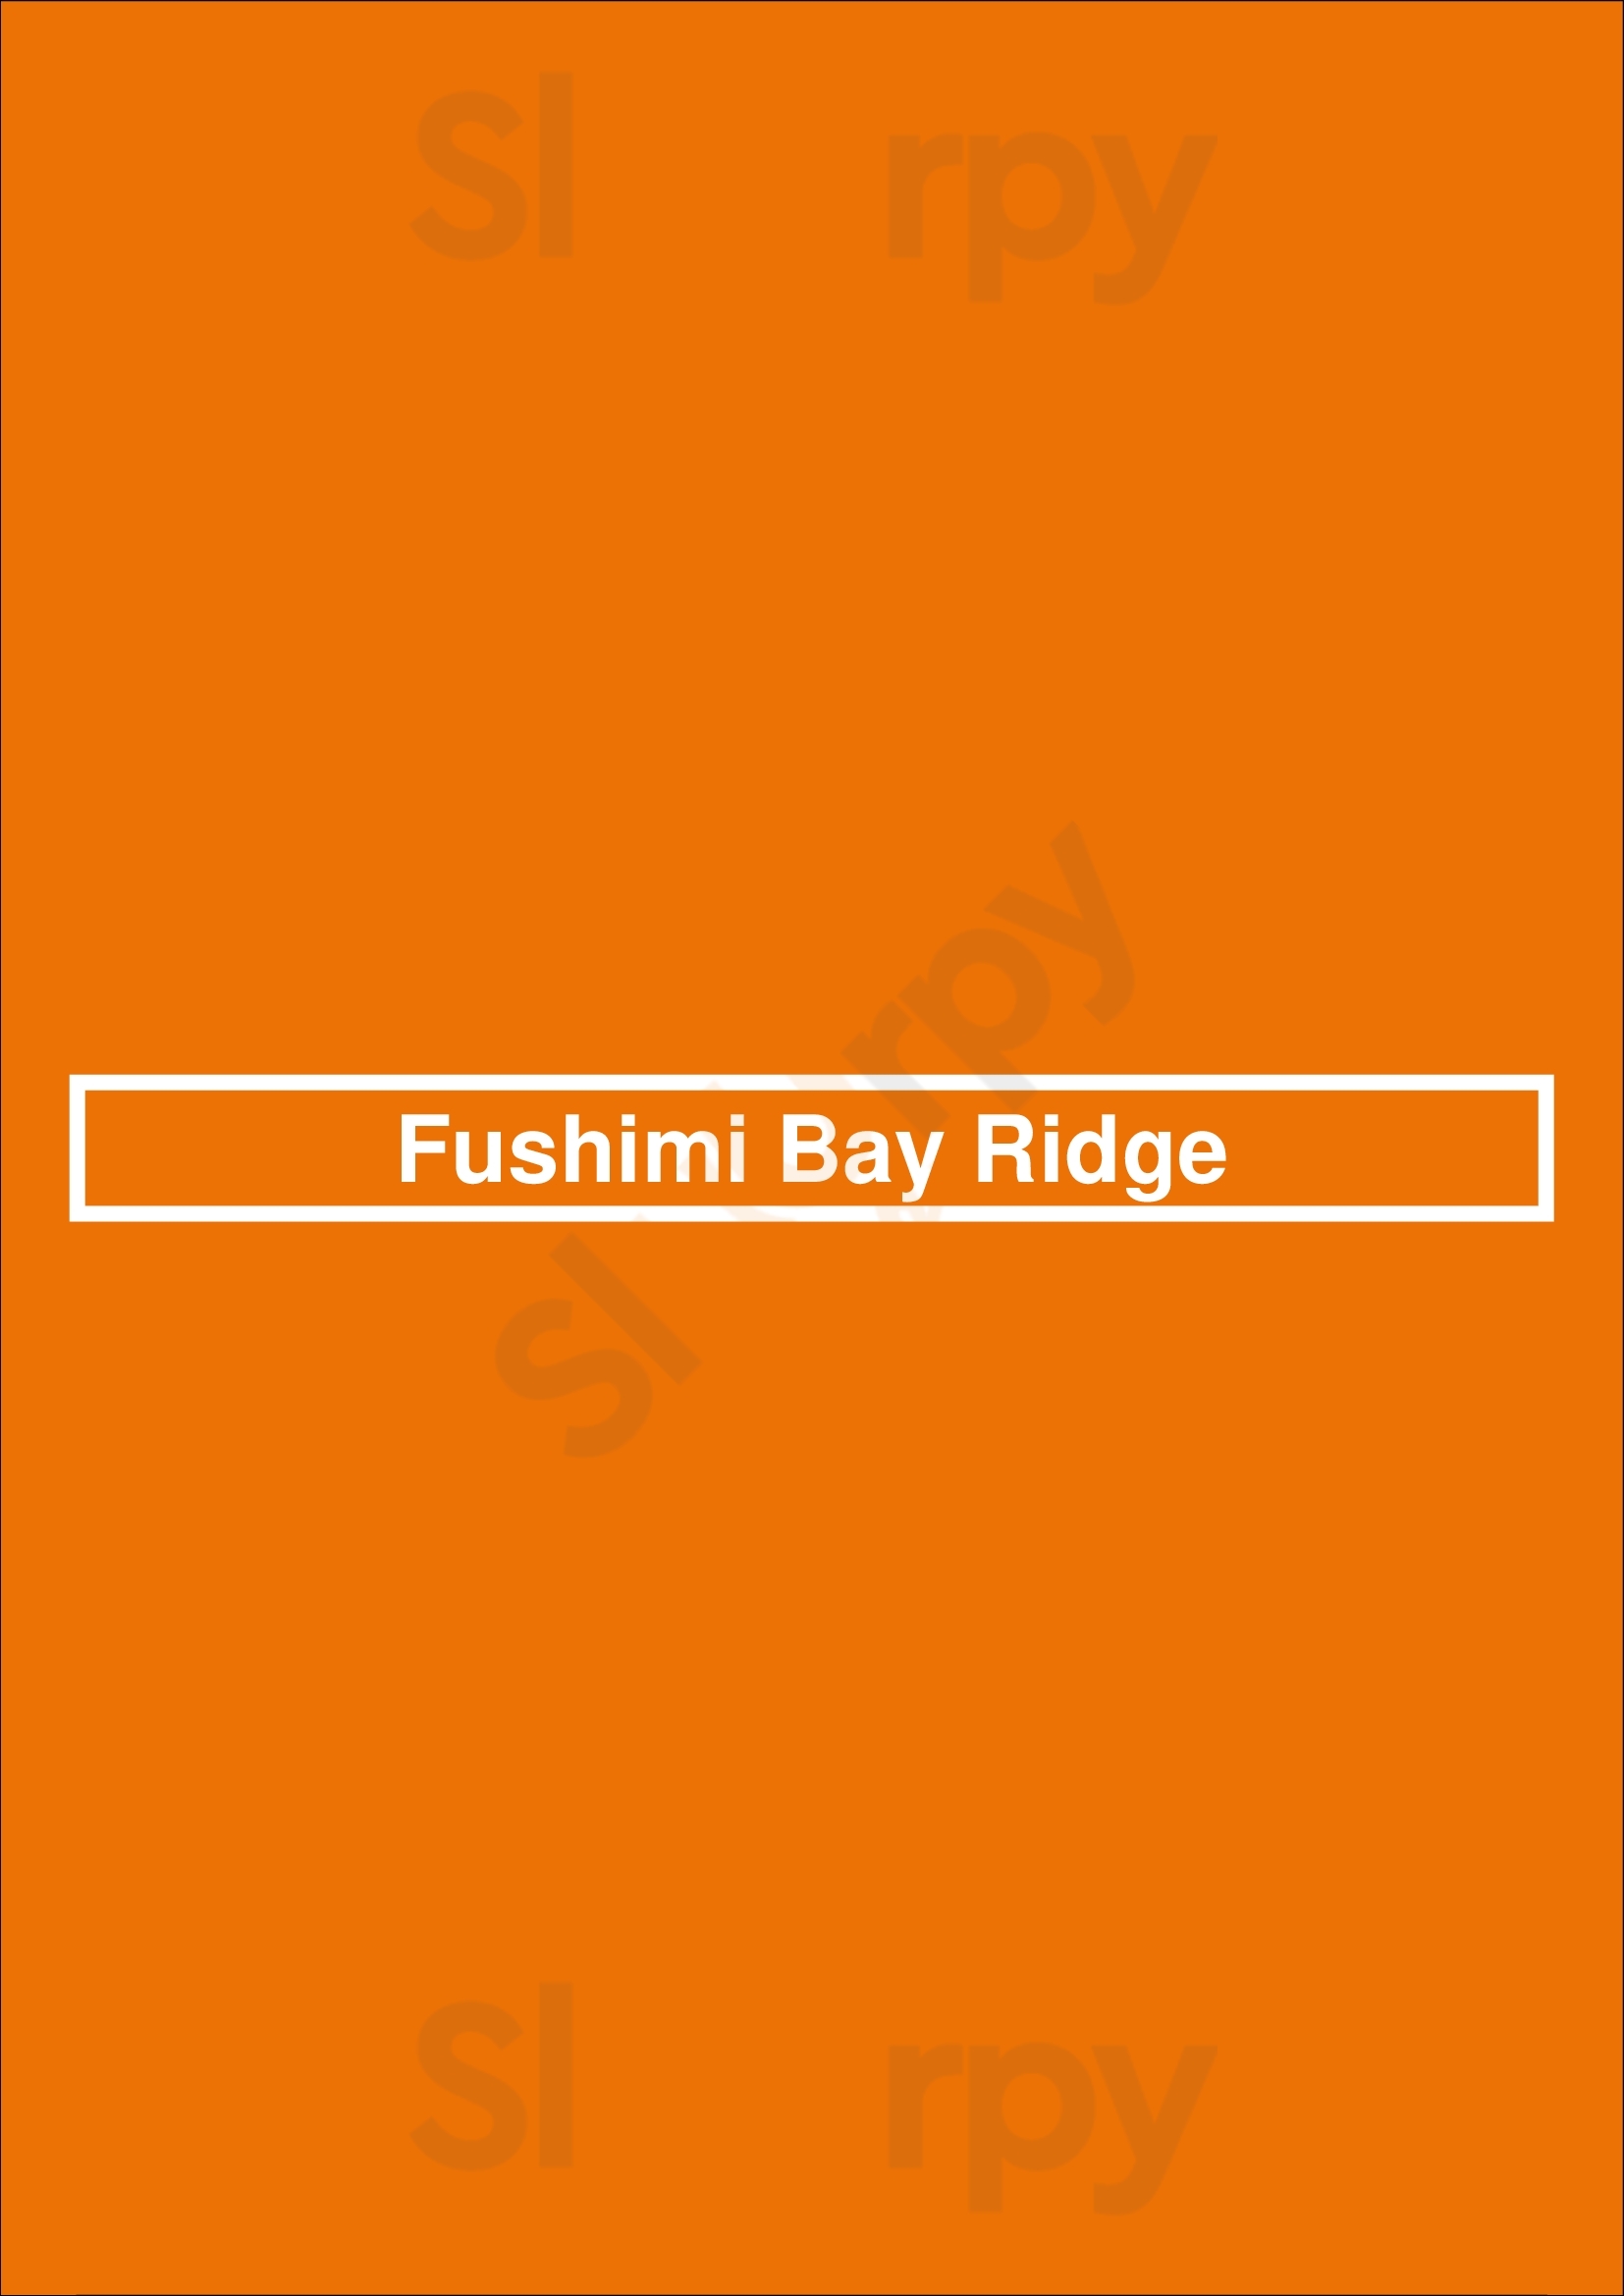 Fushimi Bay Ridge Brooklyn Menu - 1